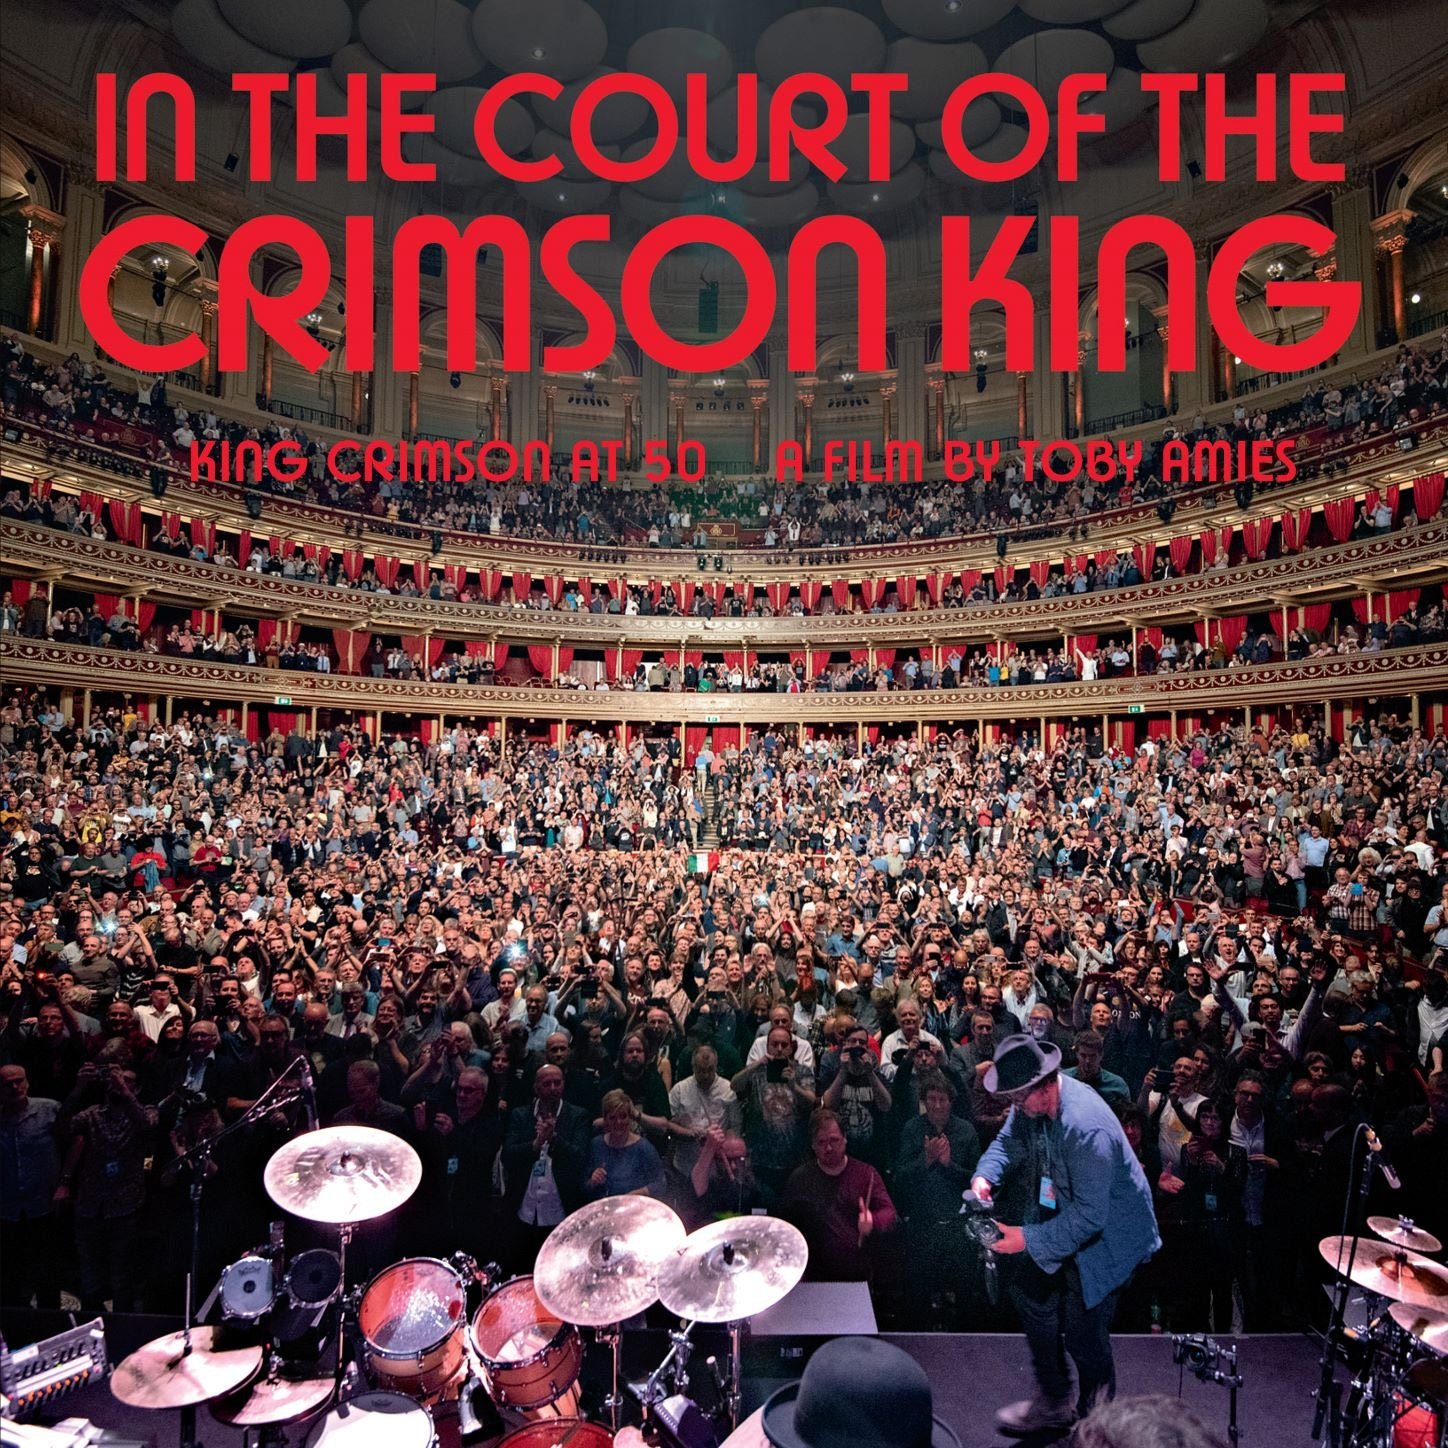 CD Shop - KING CRIMSON KING CRIMSON AT 50